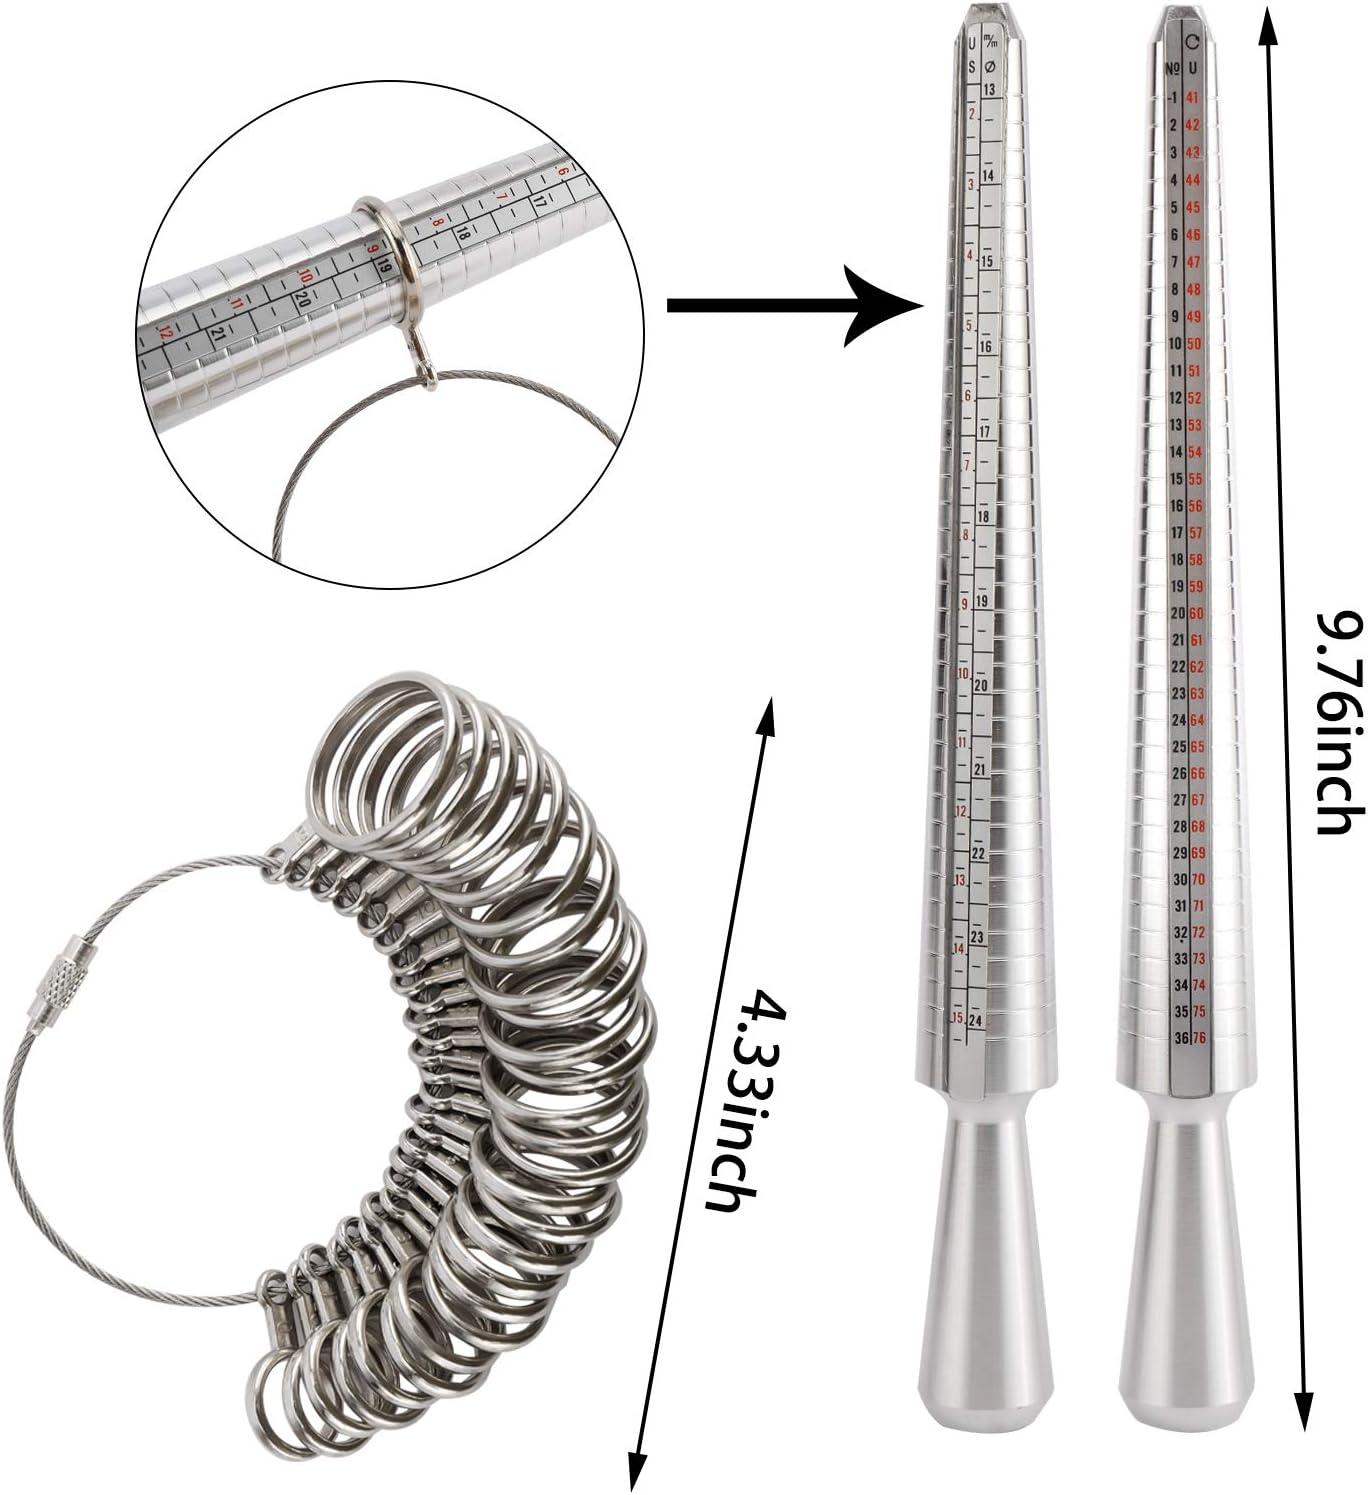 Jewelry Ring Measuring Tool, Aluminum & Plastic Ring Size Mandrel